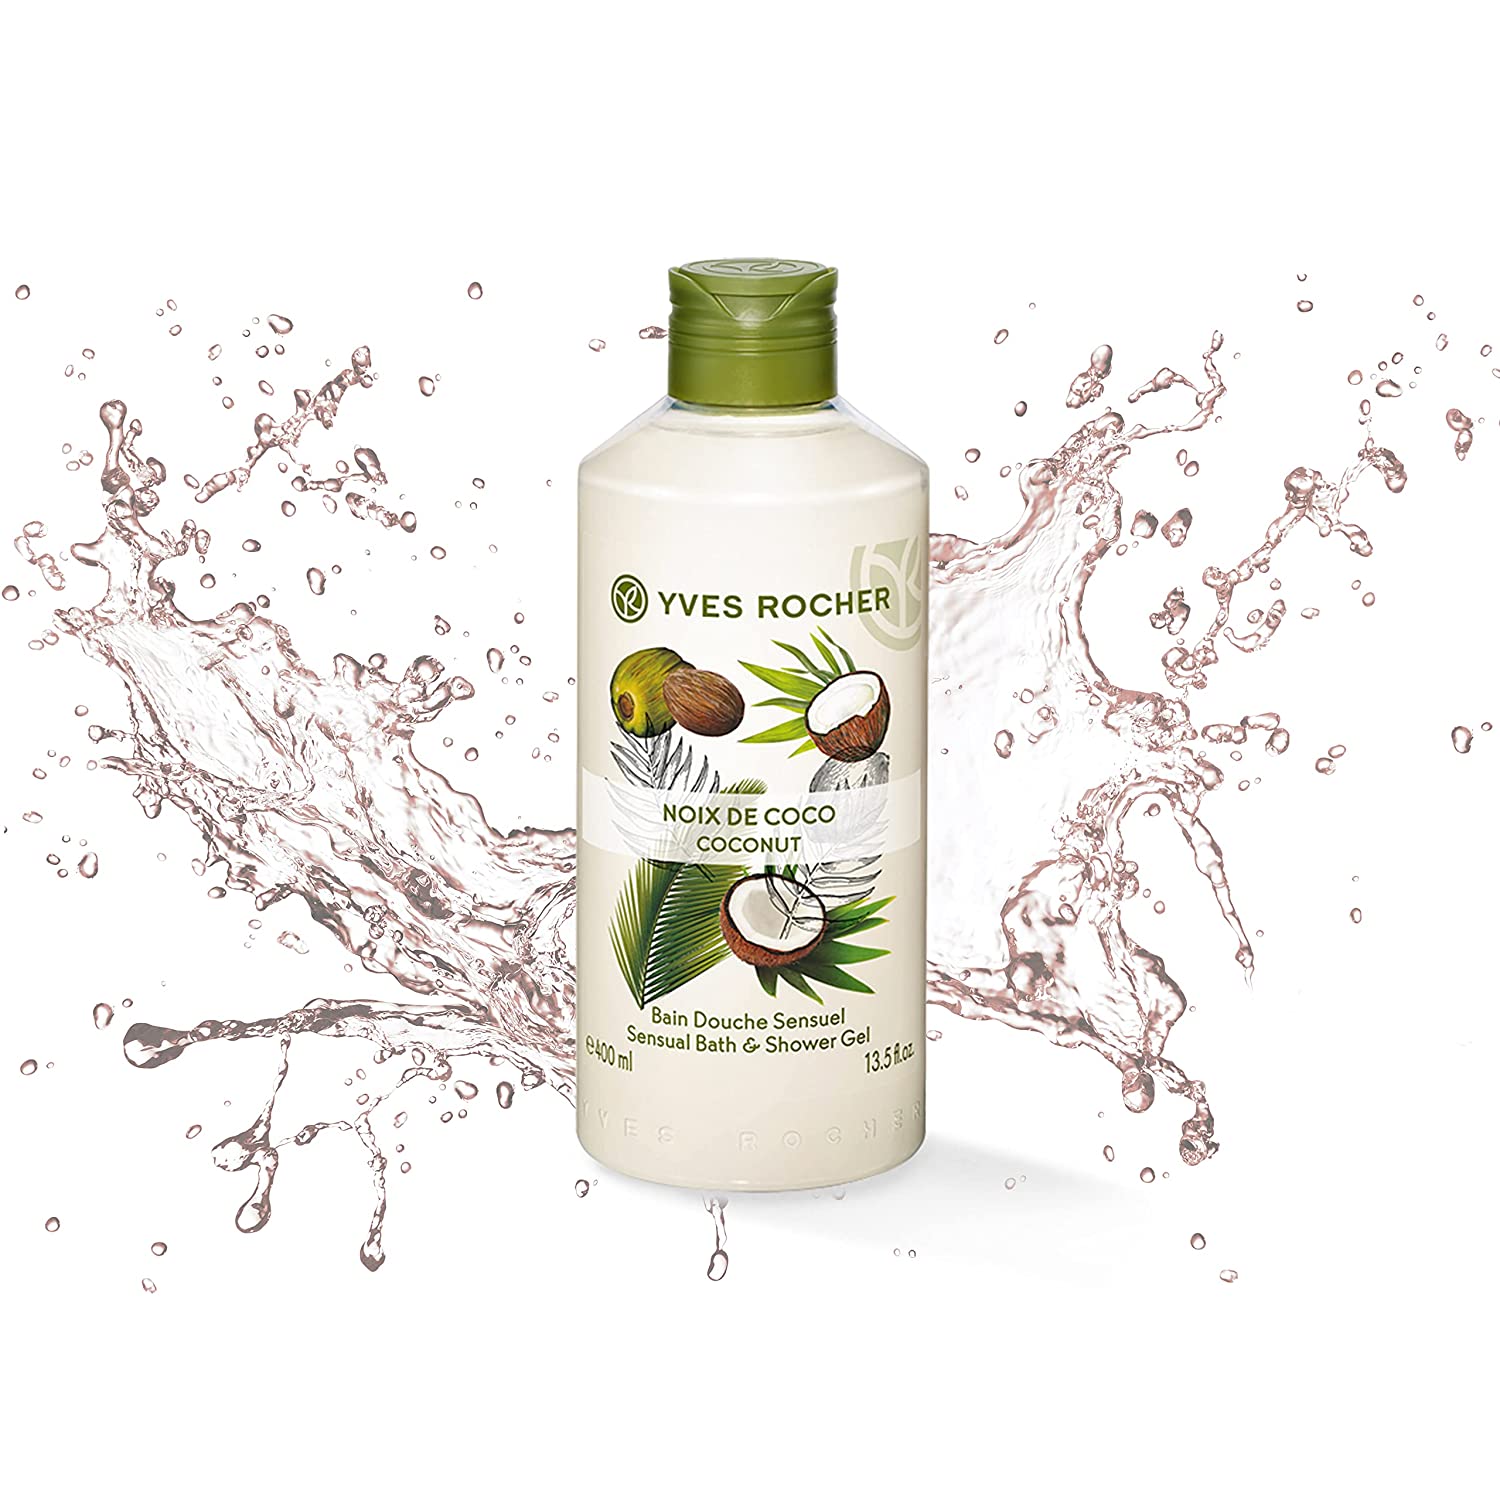 Yves Rocher LES PLAISIRS NATURE Shower Bath Coconut, Aroma Foam Bath & Nourishing Shower Gel, 1 x Bottle 400 ml